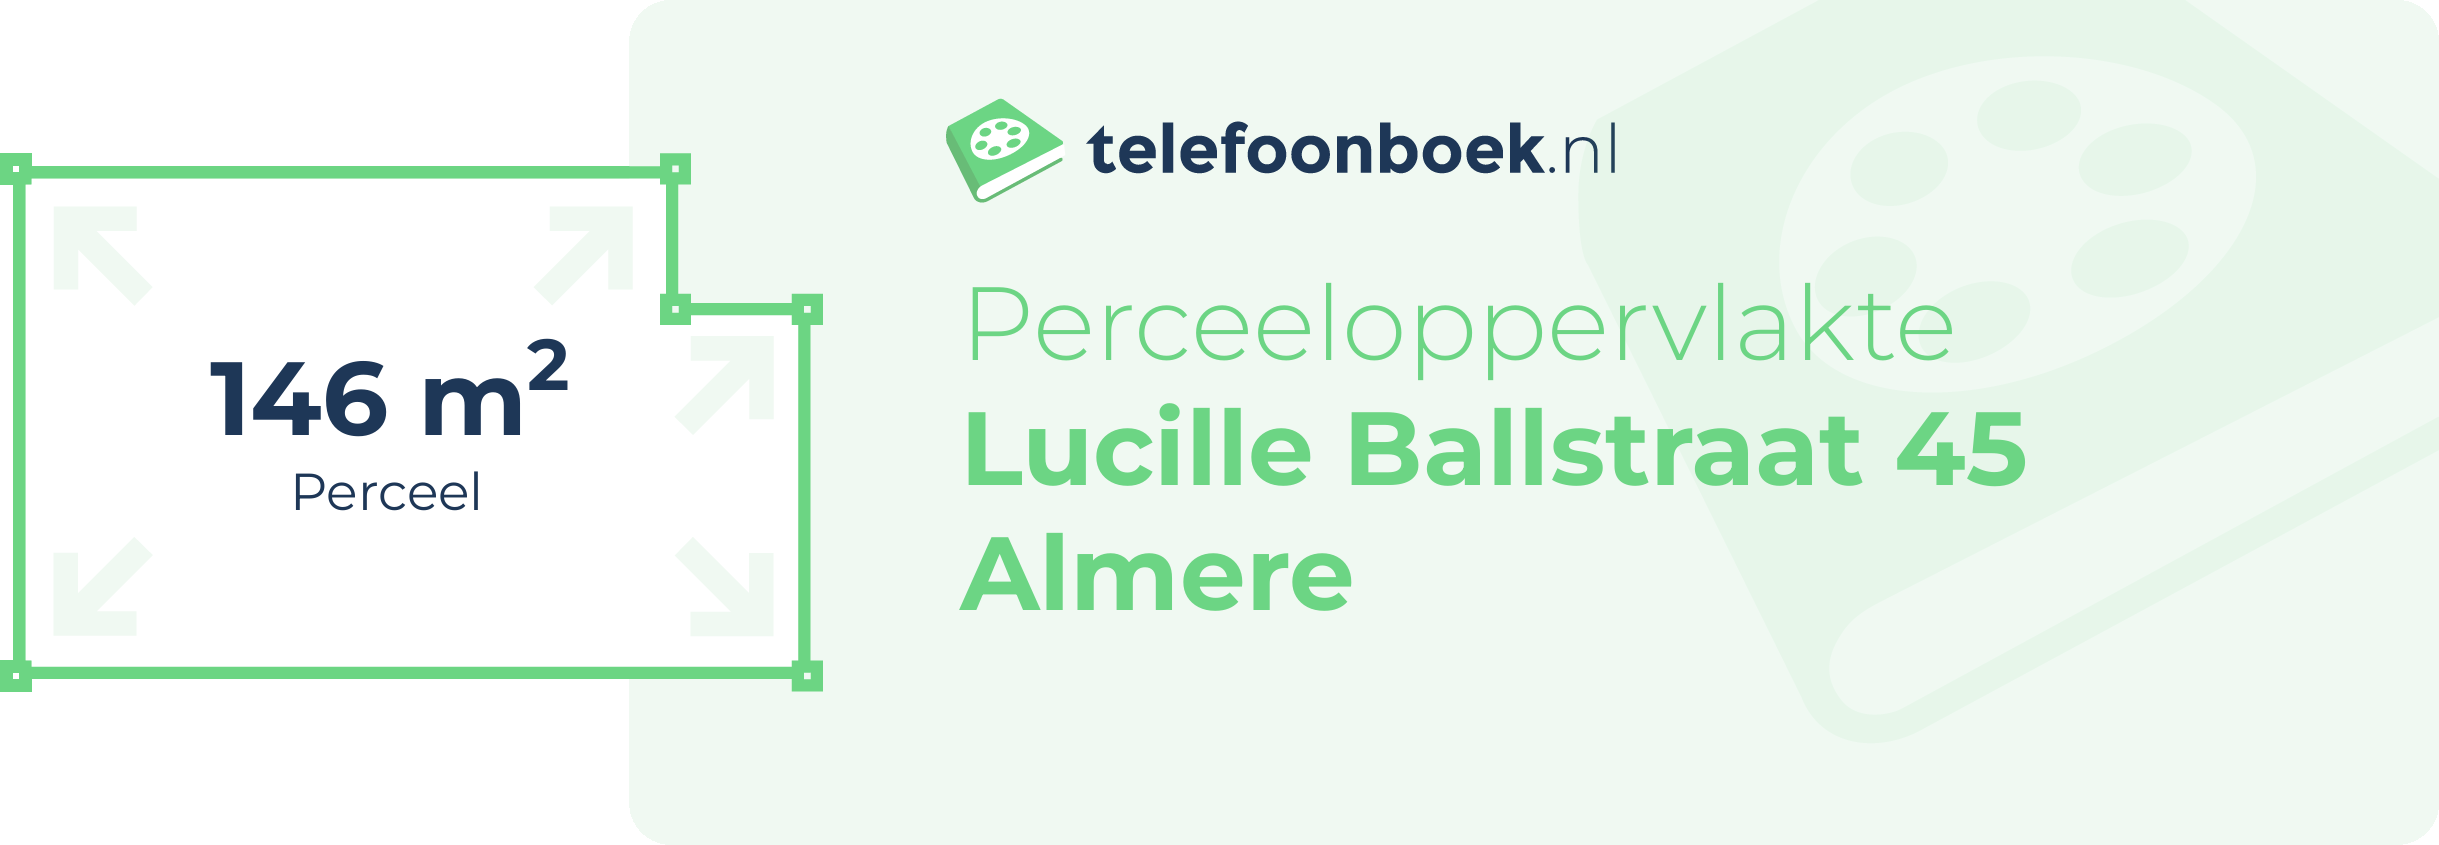 Perceeloppervlakte Lucille Ballstraat 45 Almere